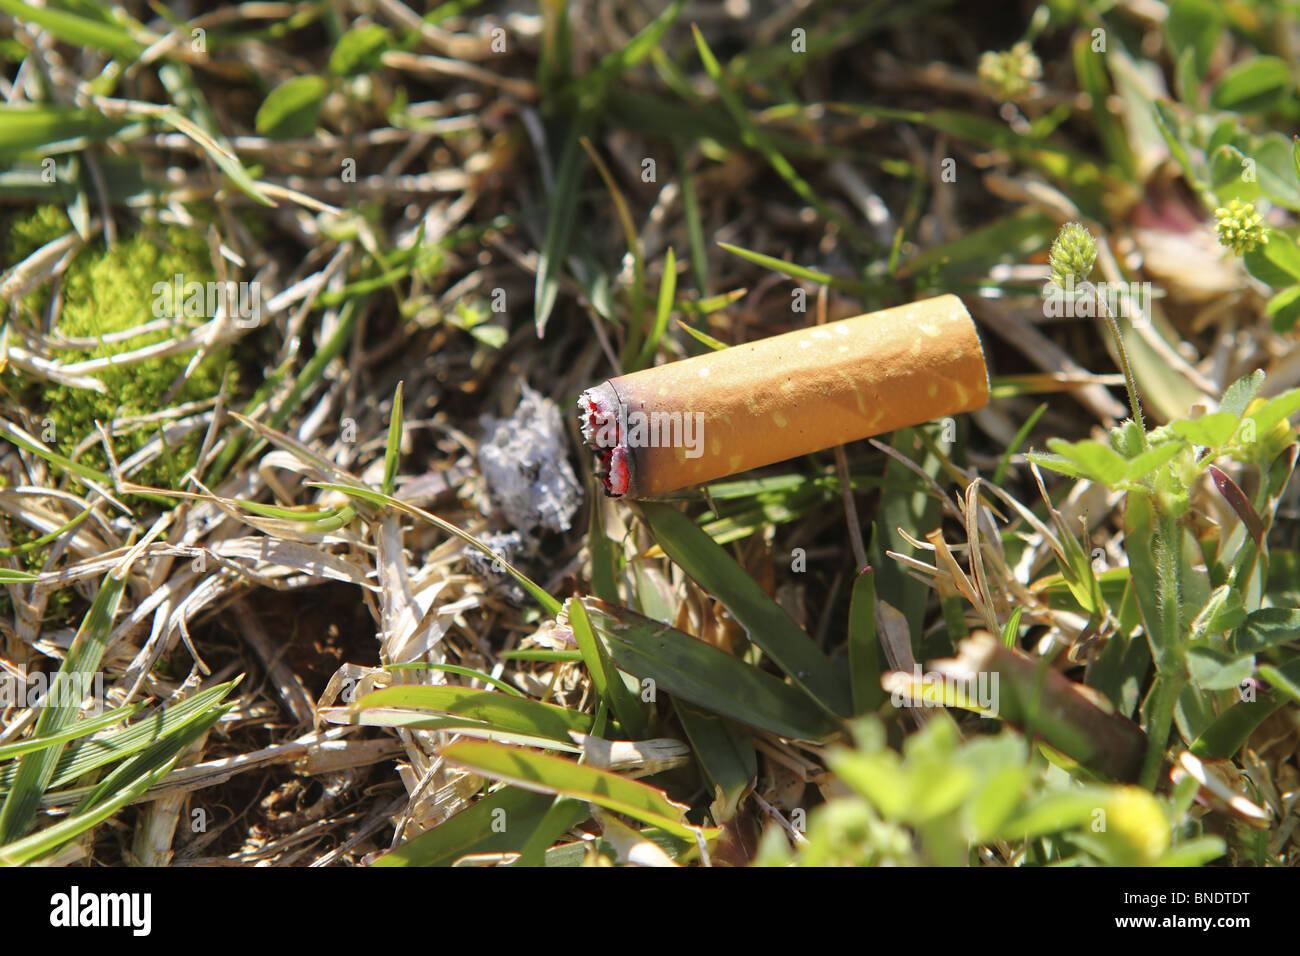 cigarette fire hazard on forest grass closeup detail Stock Photo